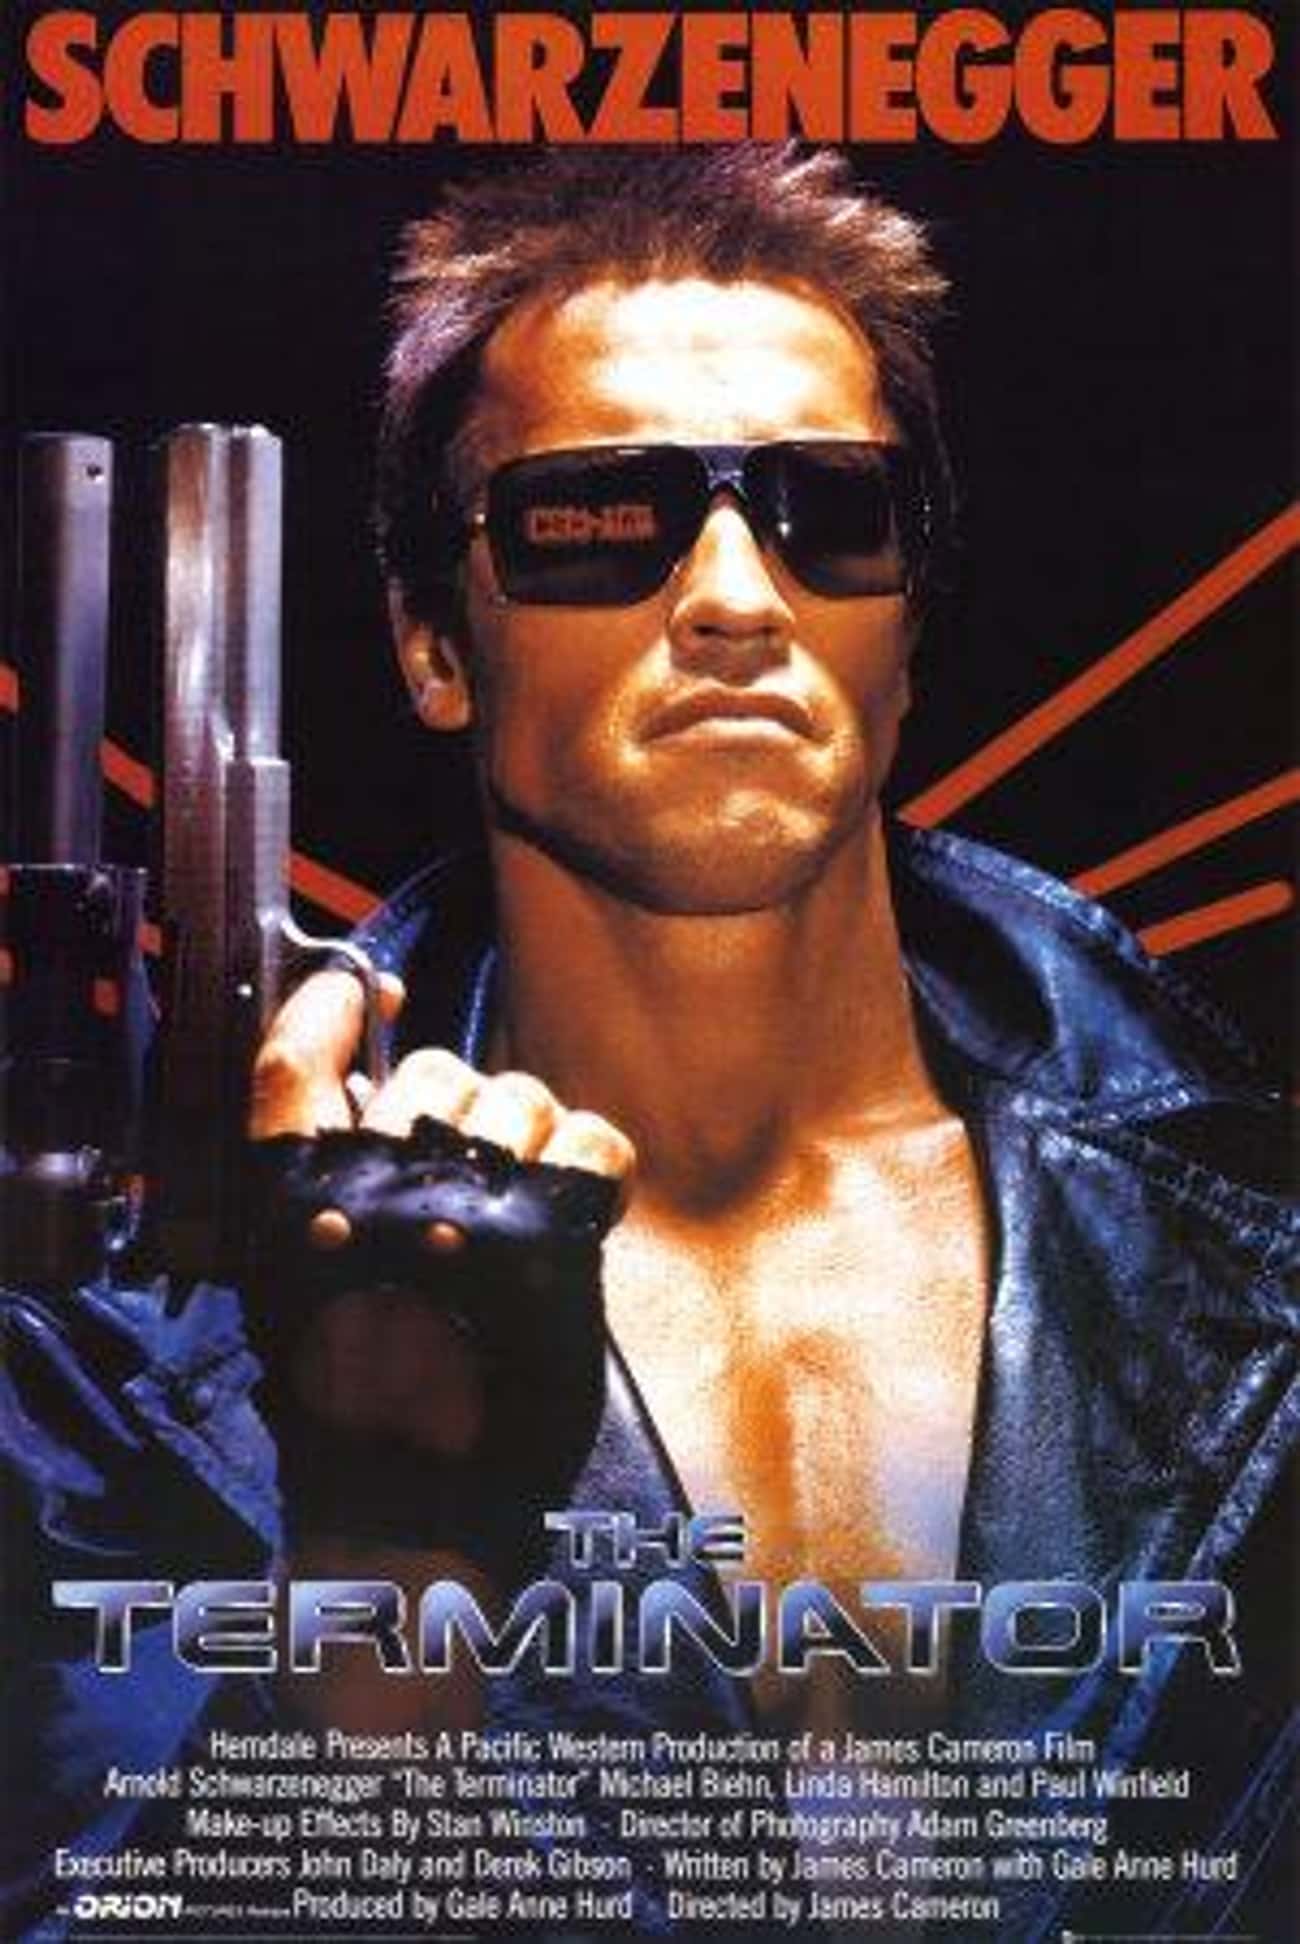 'The Terminator' Franchise